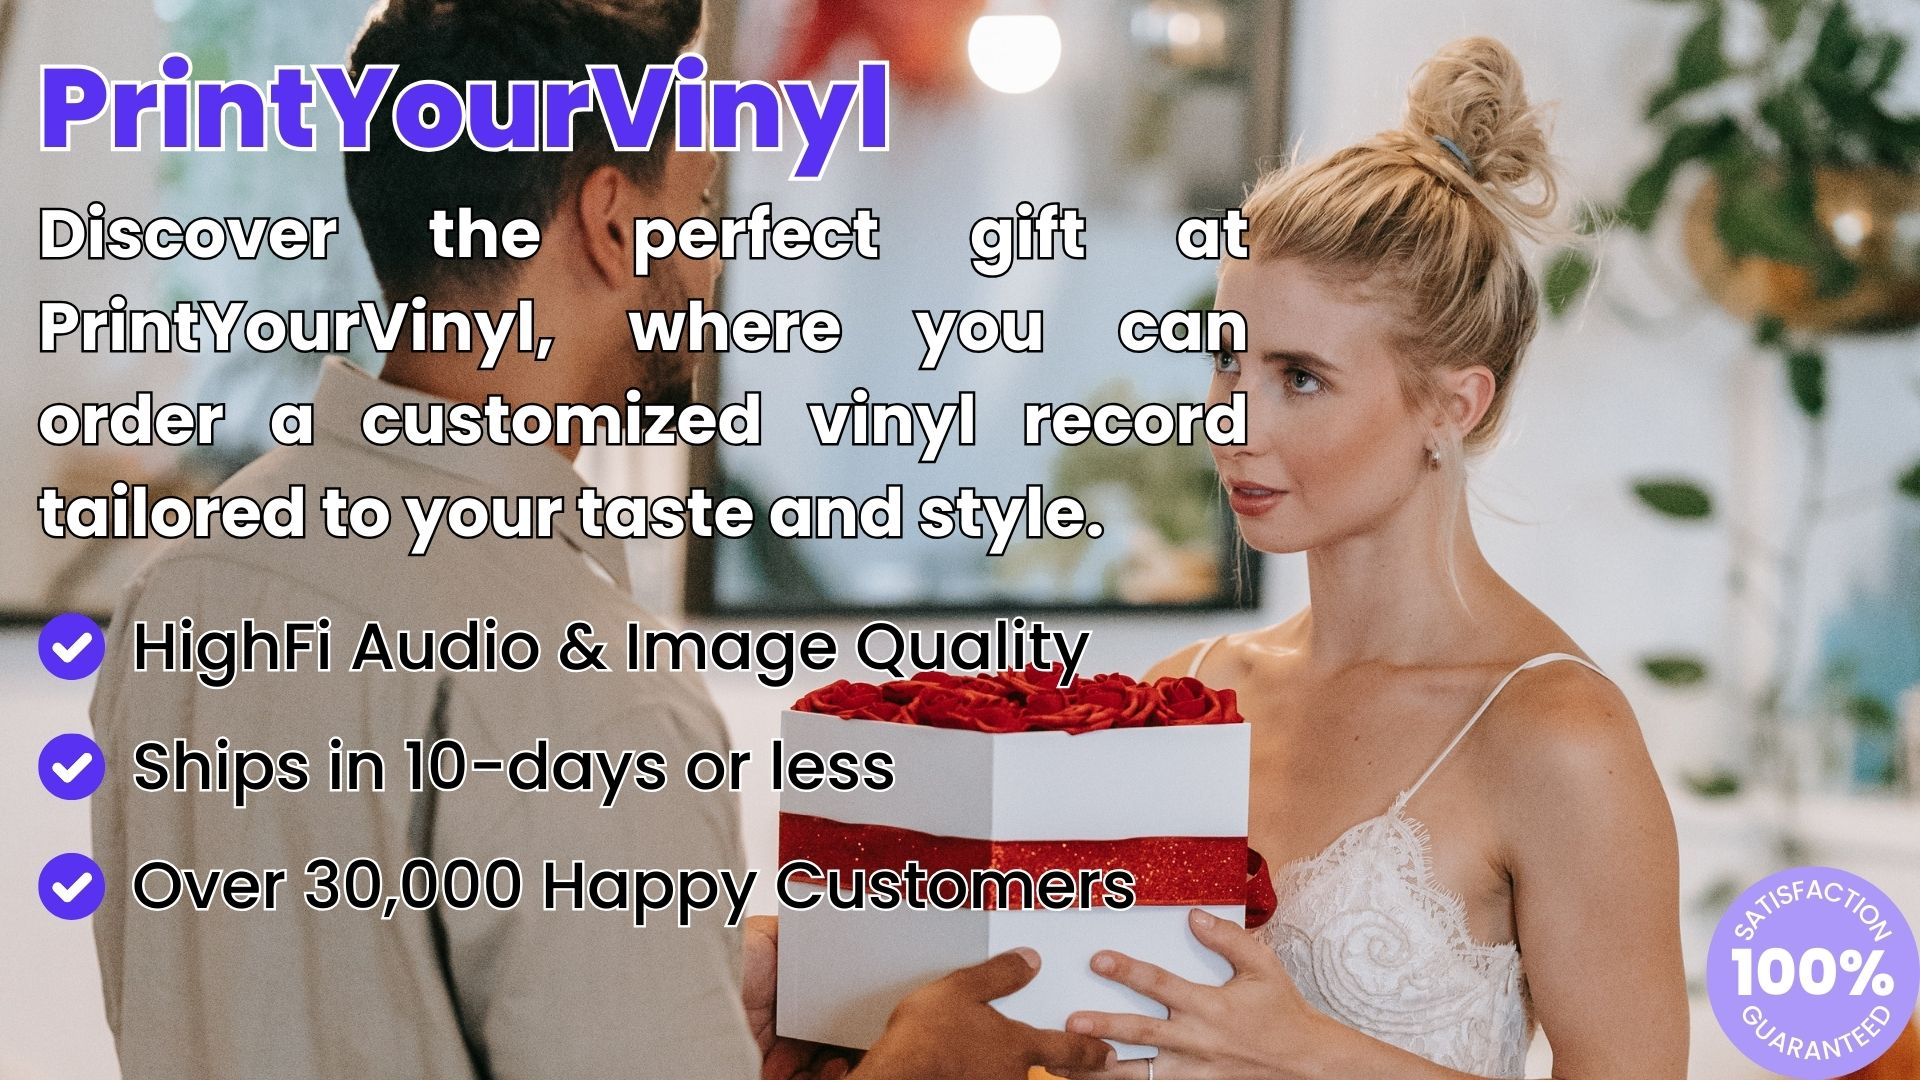 PrintYourVinyl Custom Vinyl Record, Custom Vinyl Record Gift, Customized Vinyl Record